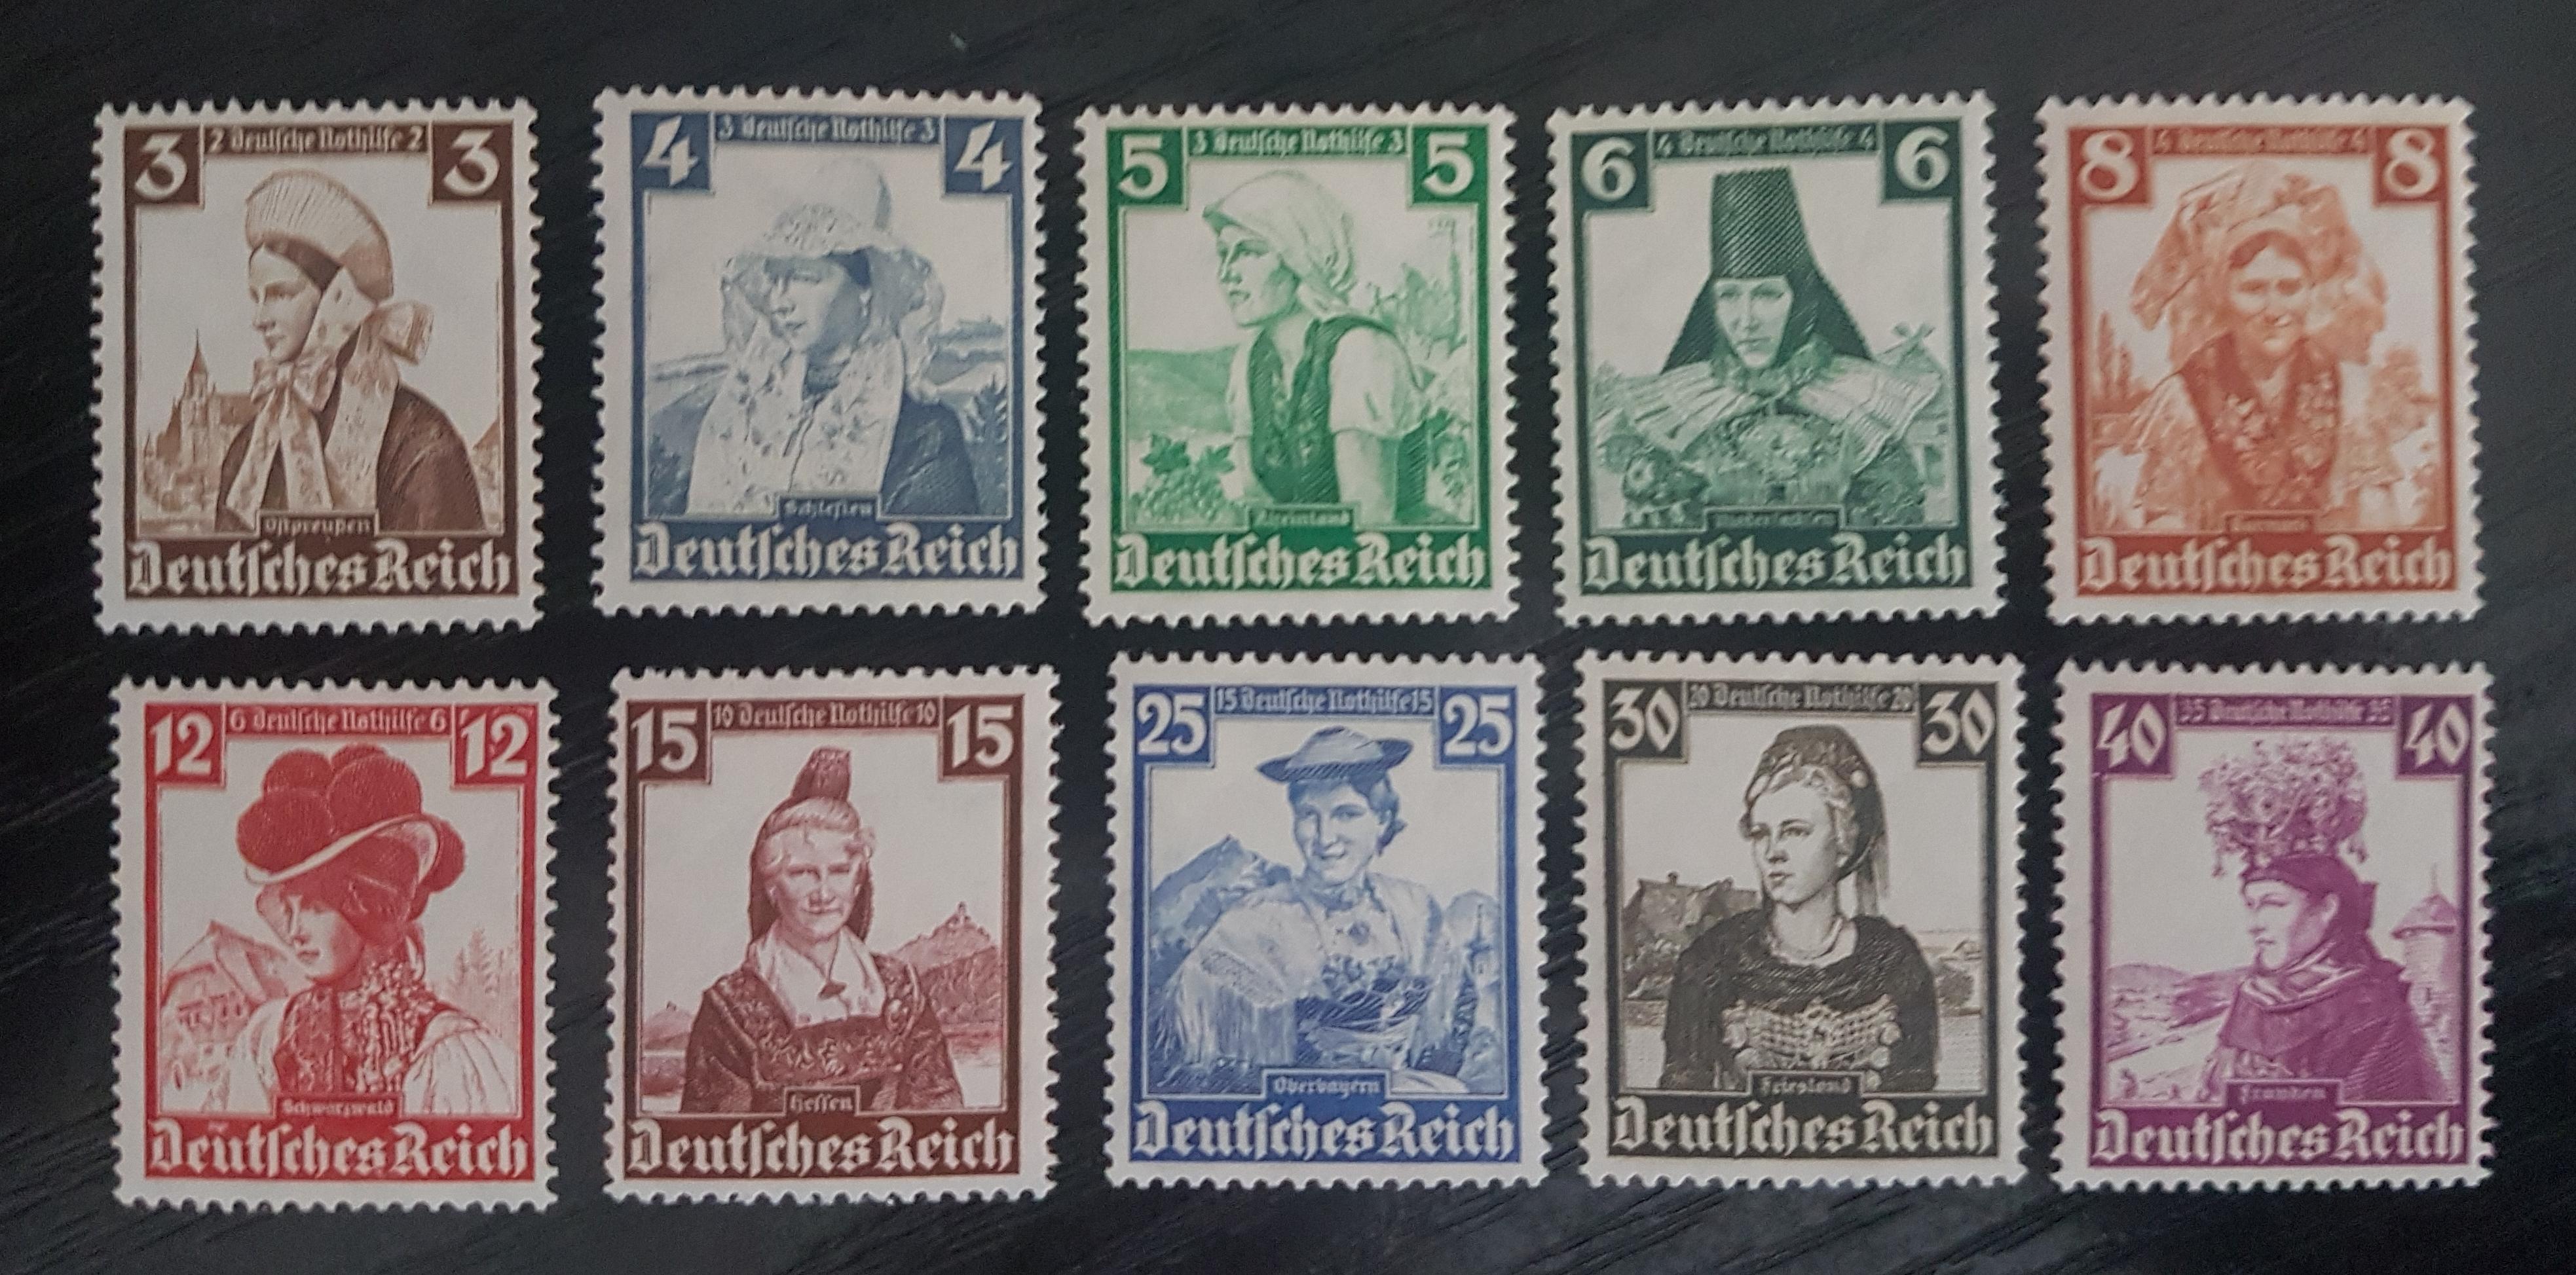 Фашистские марки. Почтовая марка Deutsches Reich 3. Почтовая марка с Гитлером Deutsches Reich. Марки Германия Рейх 1935.